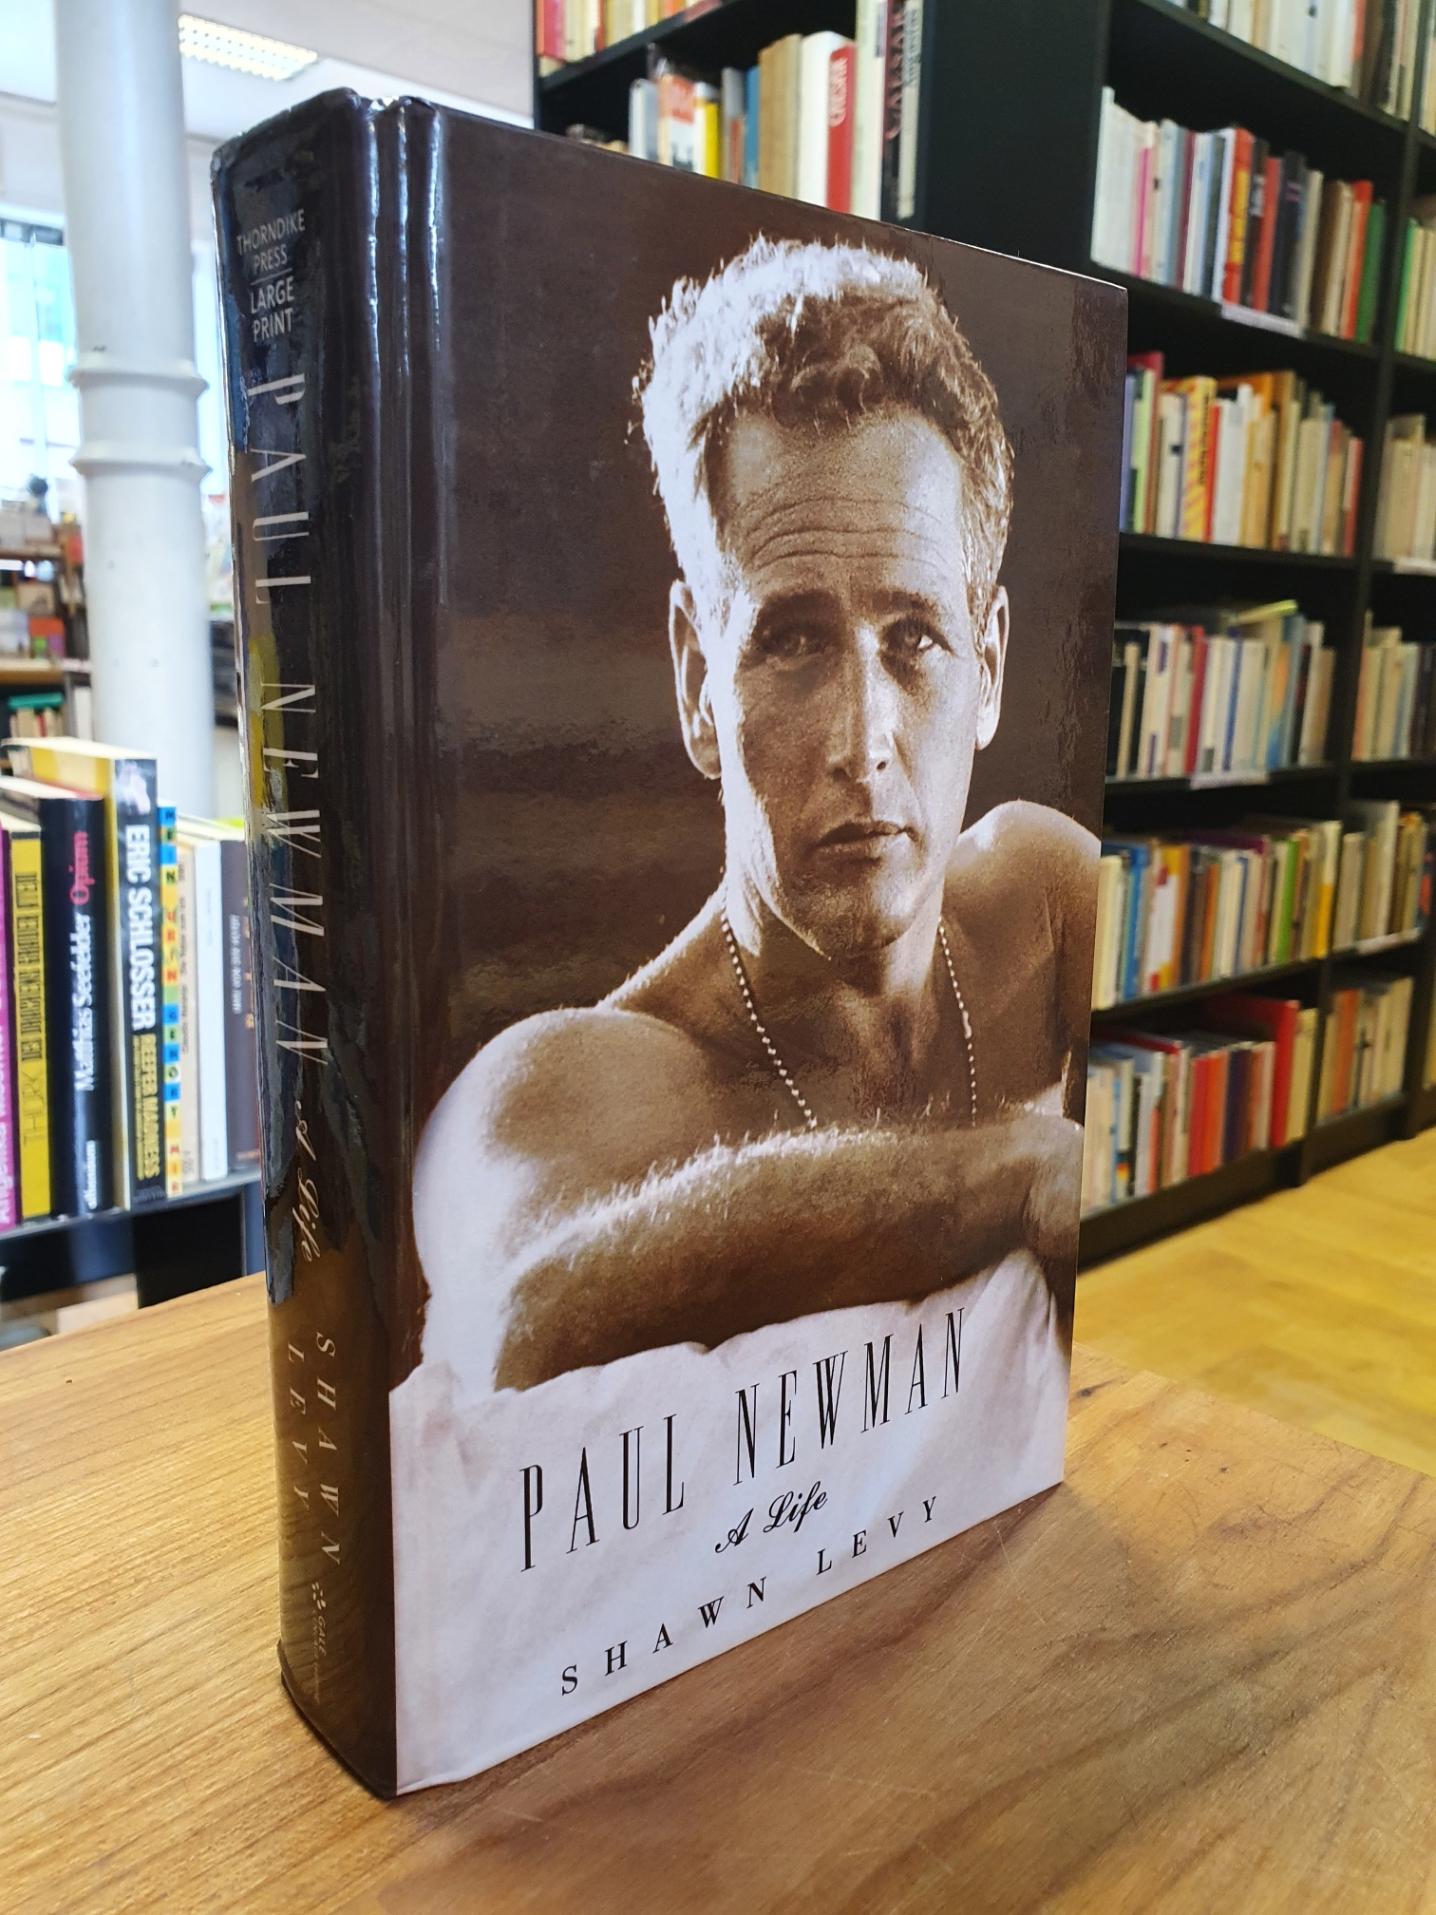 Levy, Paul Newman: A Life,